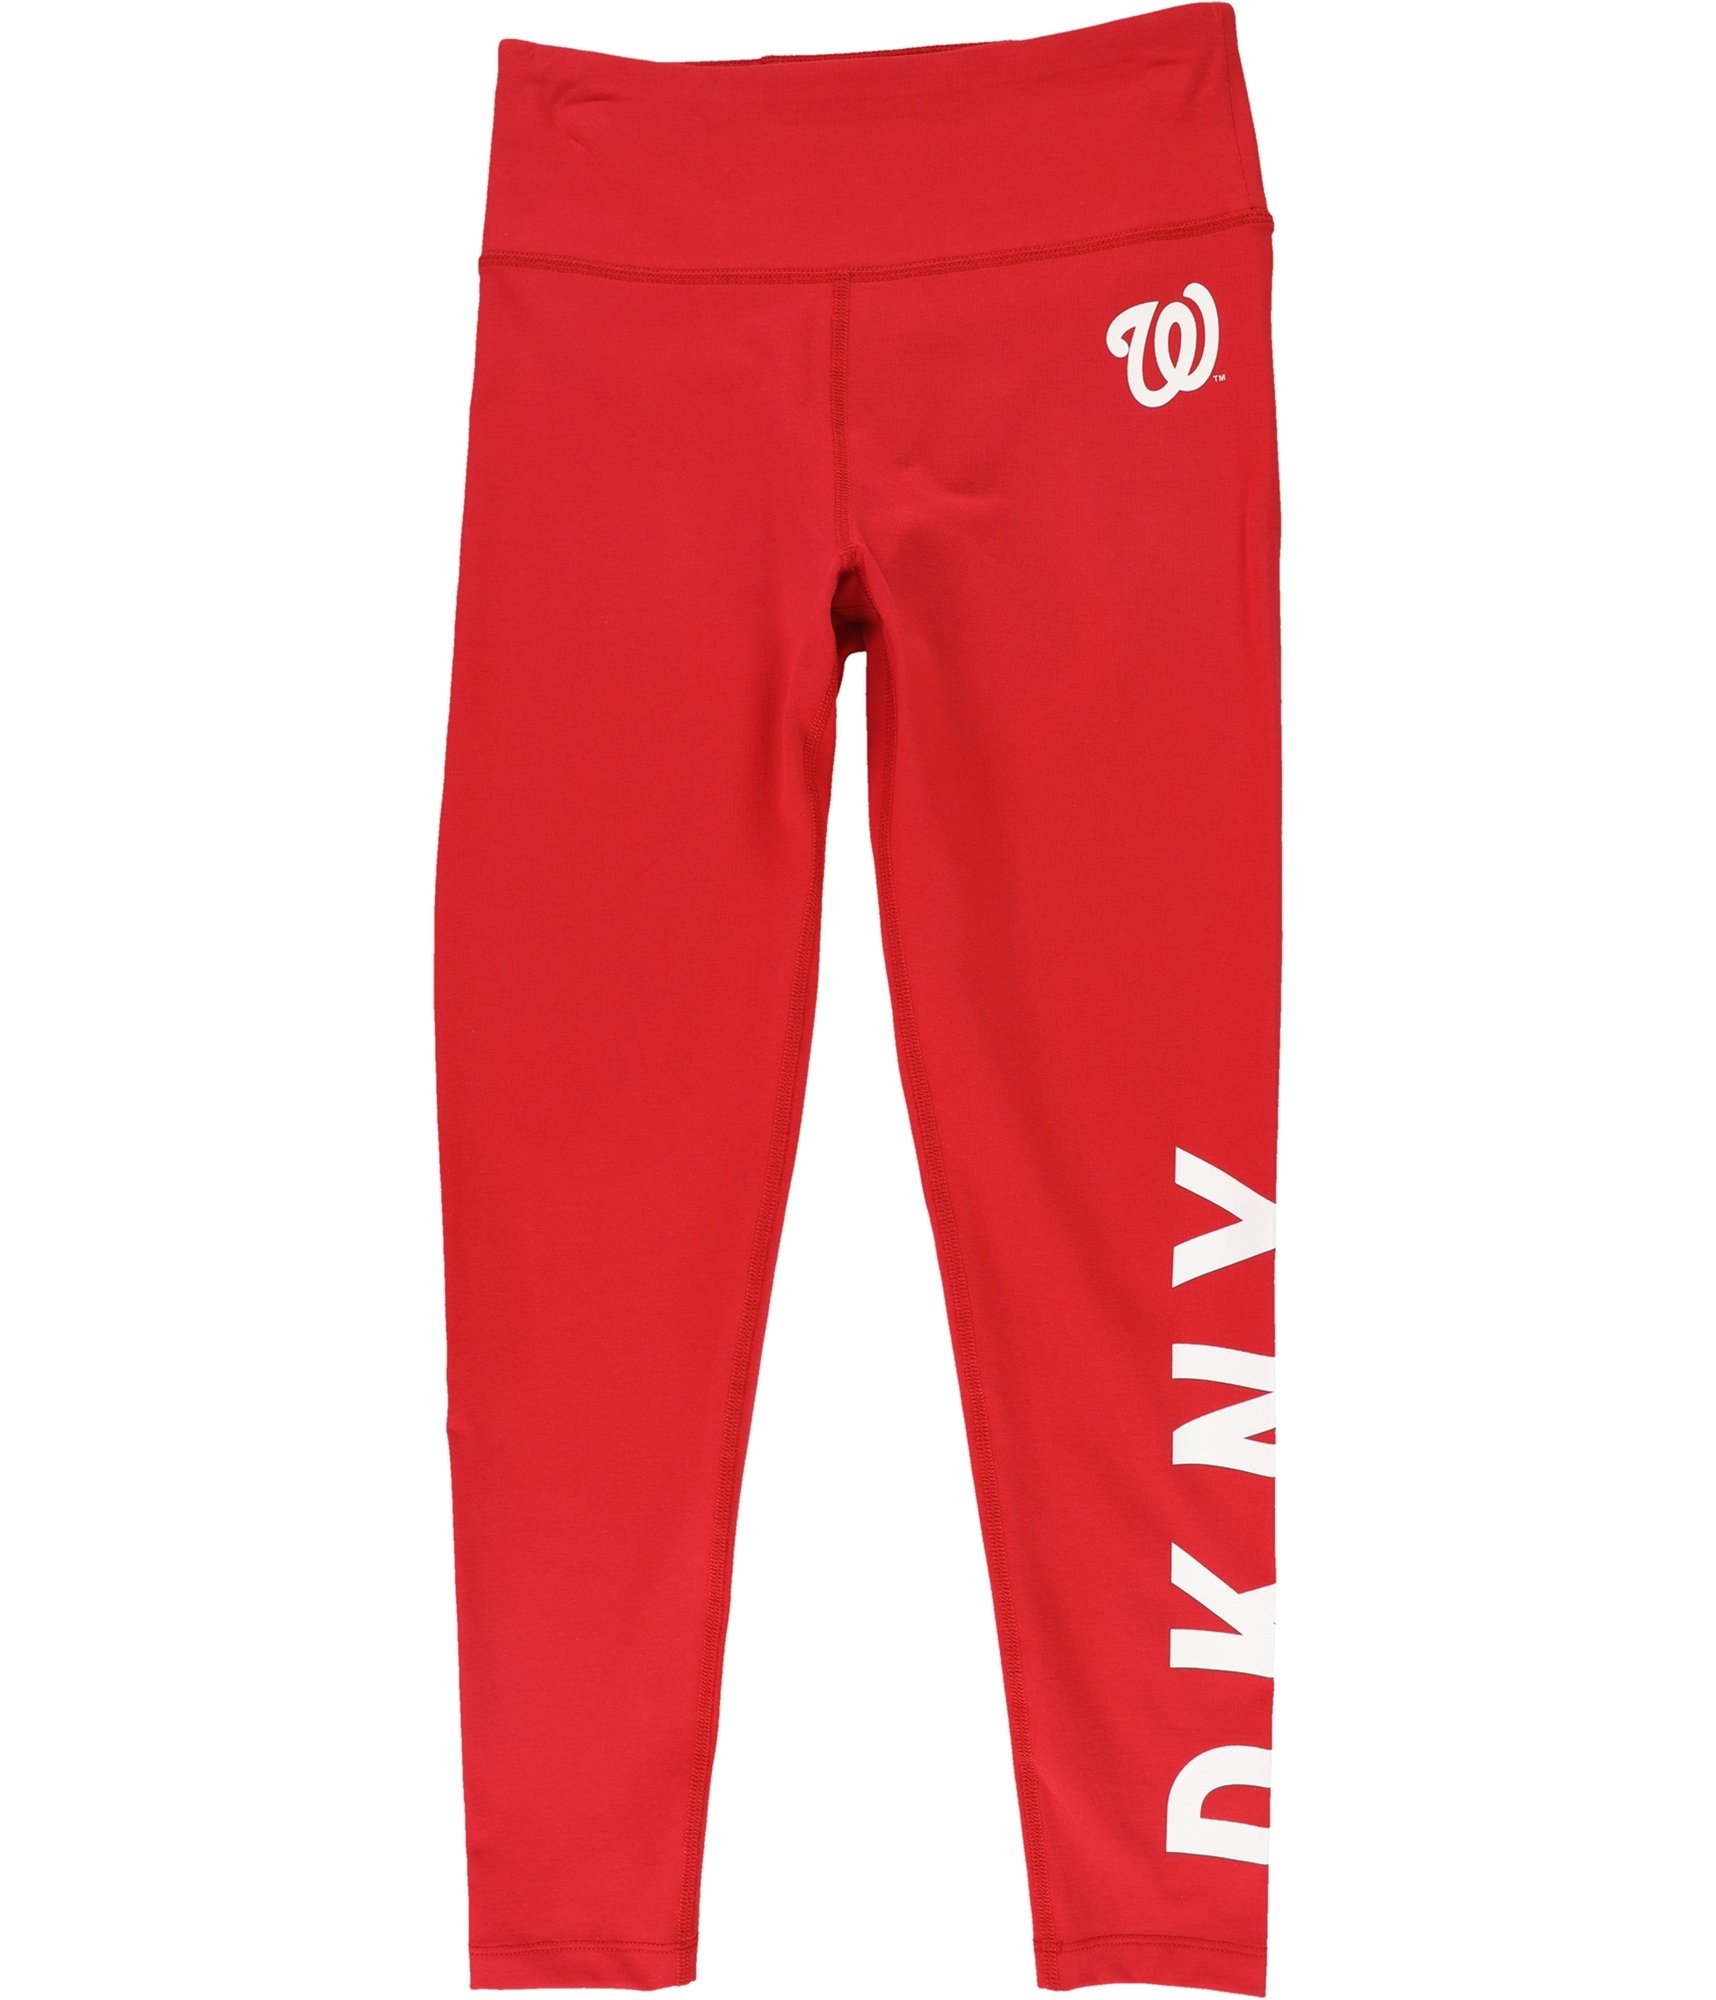 Buy a Dkny Womens Washington Nationals Compression Athletic Pants